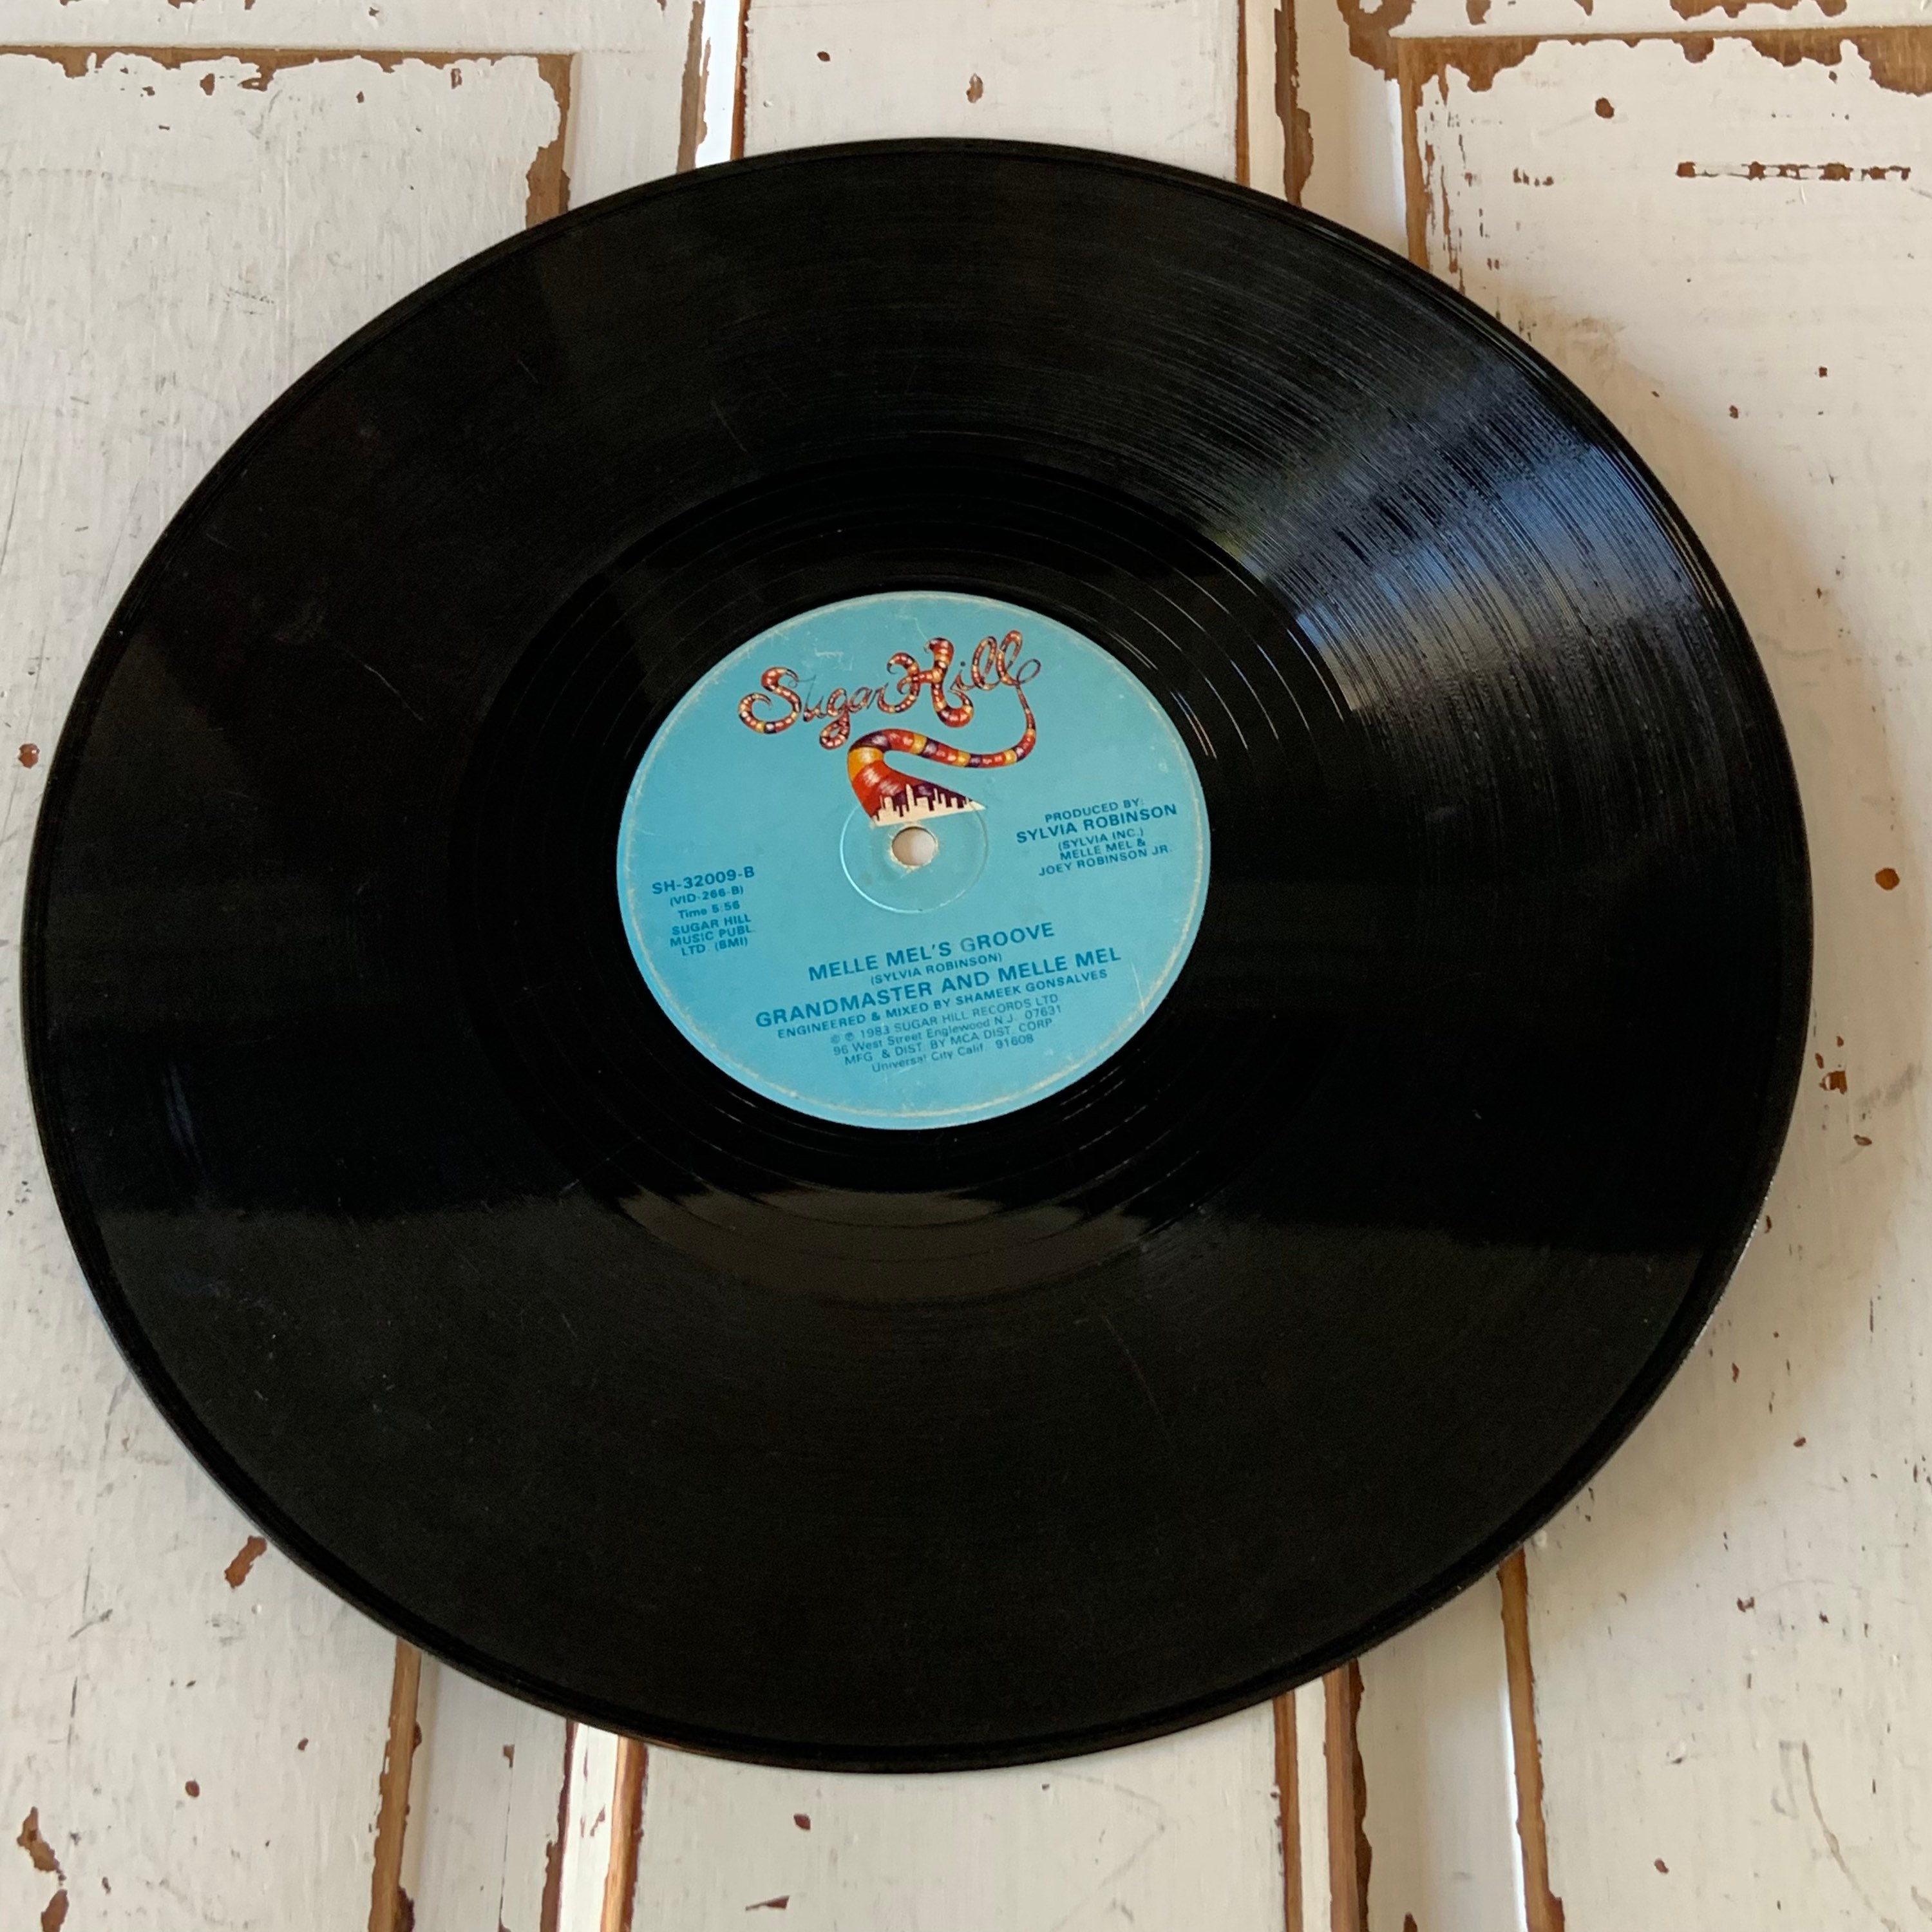 GRAND MASTER FLASH & MELLE MEL - WHITE LINES U.S. UK MIX 12 VINYL LP RECORD